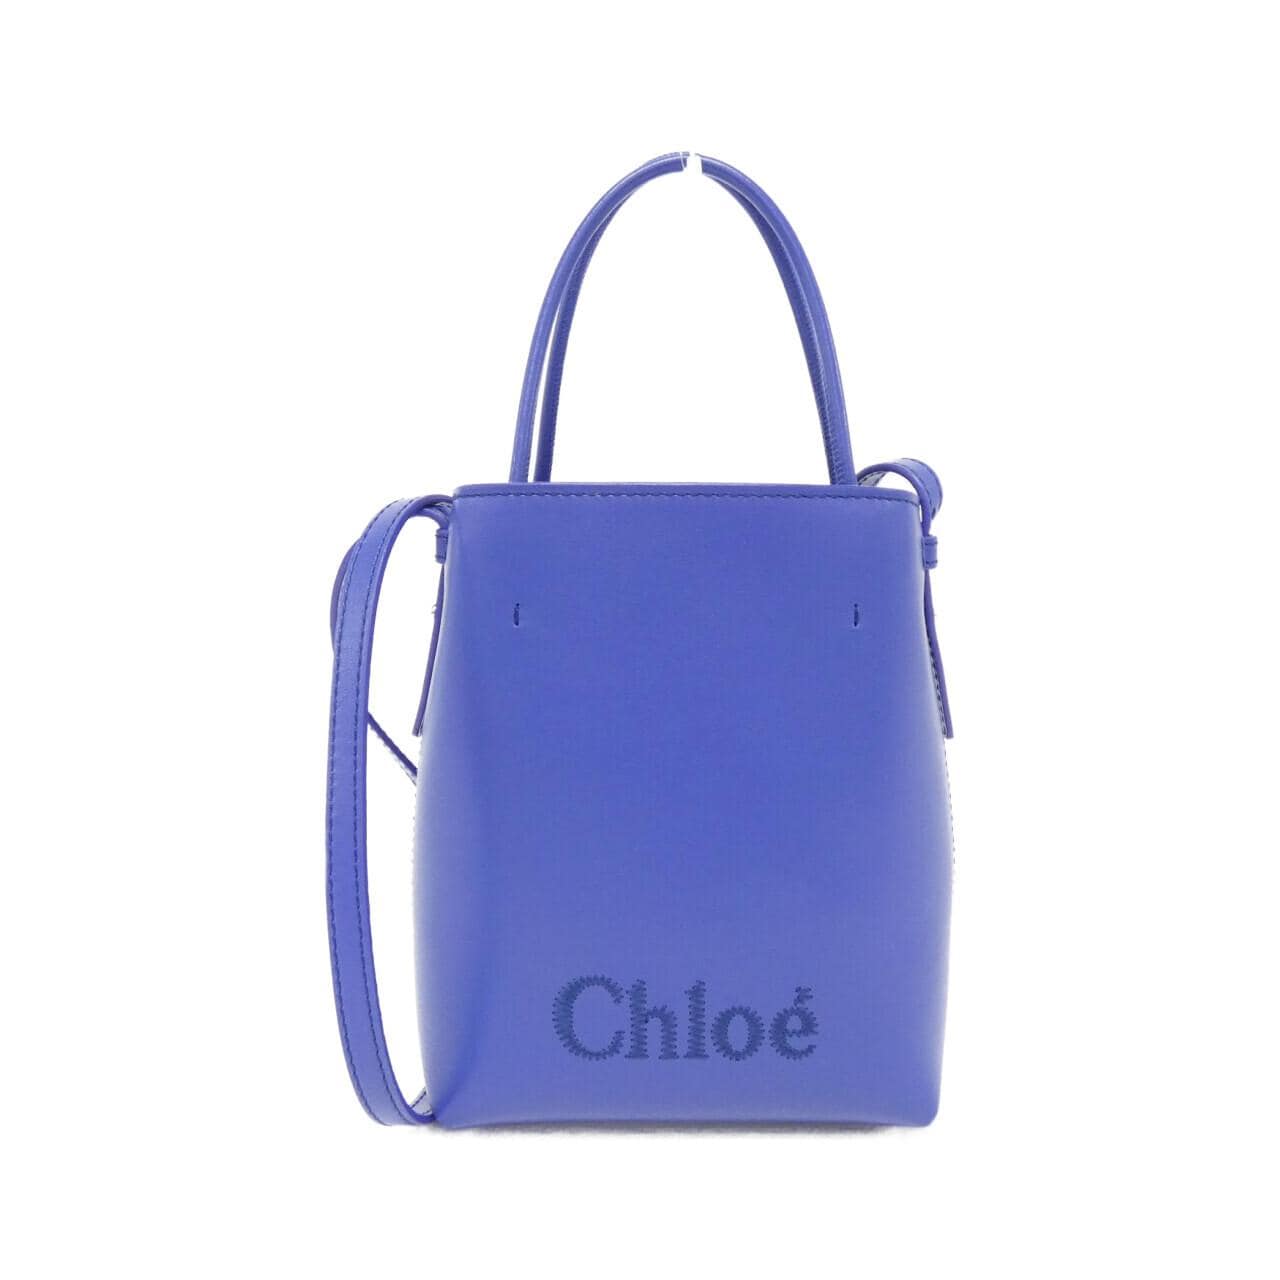 Chloe CHLOE SENSE MICRO TOTE CHC23UP873 I10 Bag